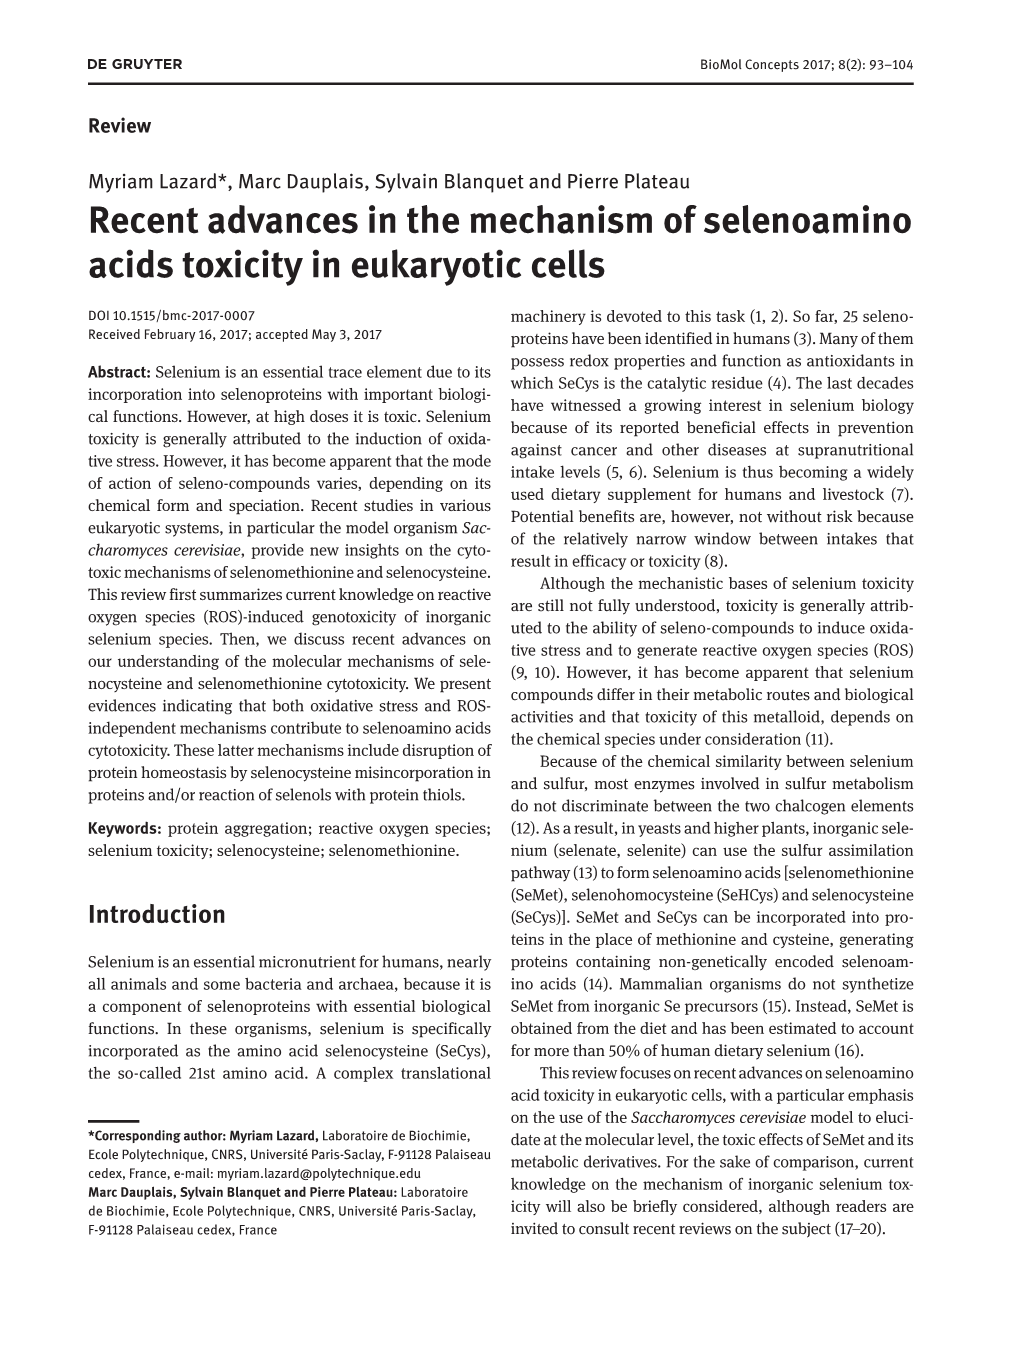 Recent Advances in the Mechanism of Selenoamino Acids Toxicity in Eukaryotic Cells